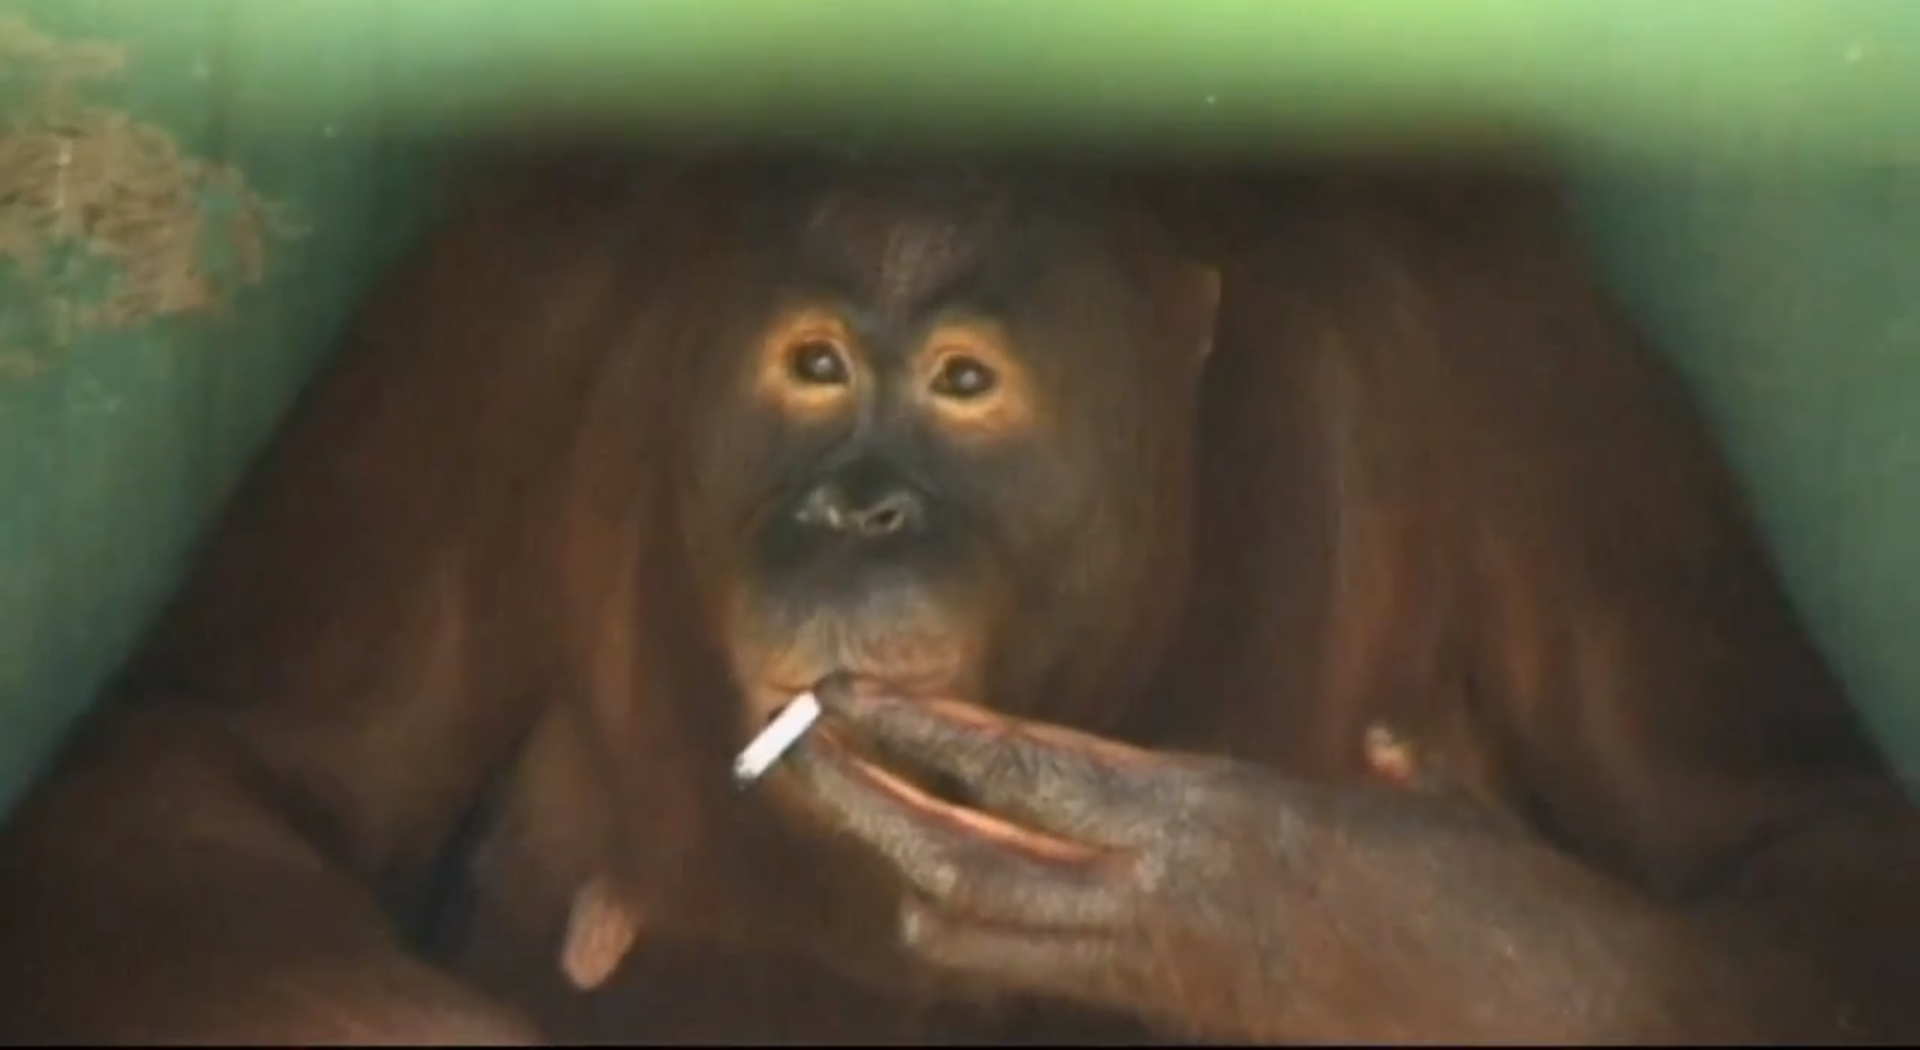 Djur, Katt, Schimpans, orangutang, Cigaretter, Rökning